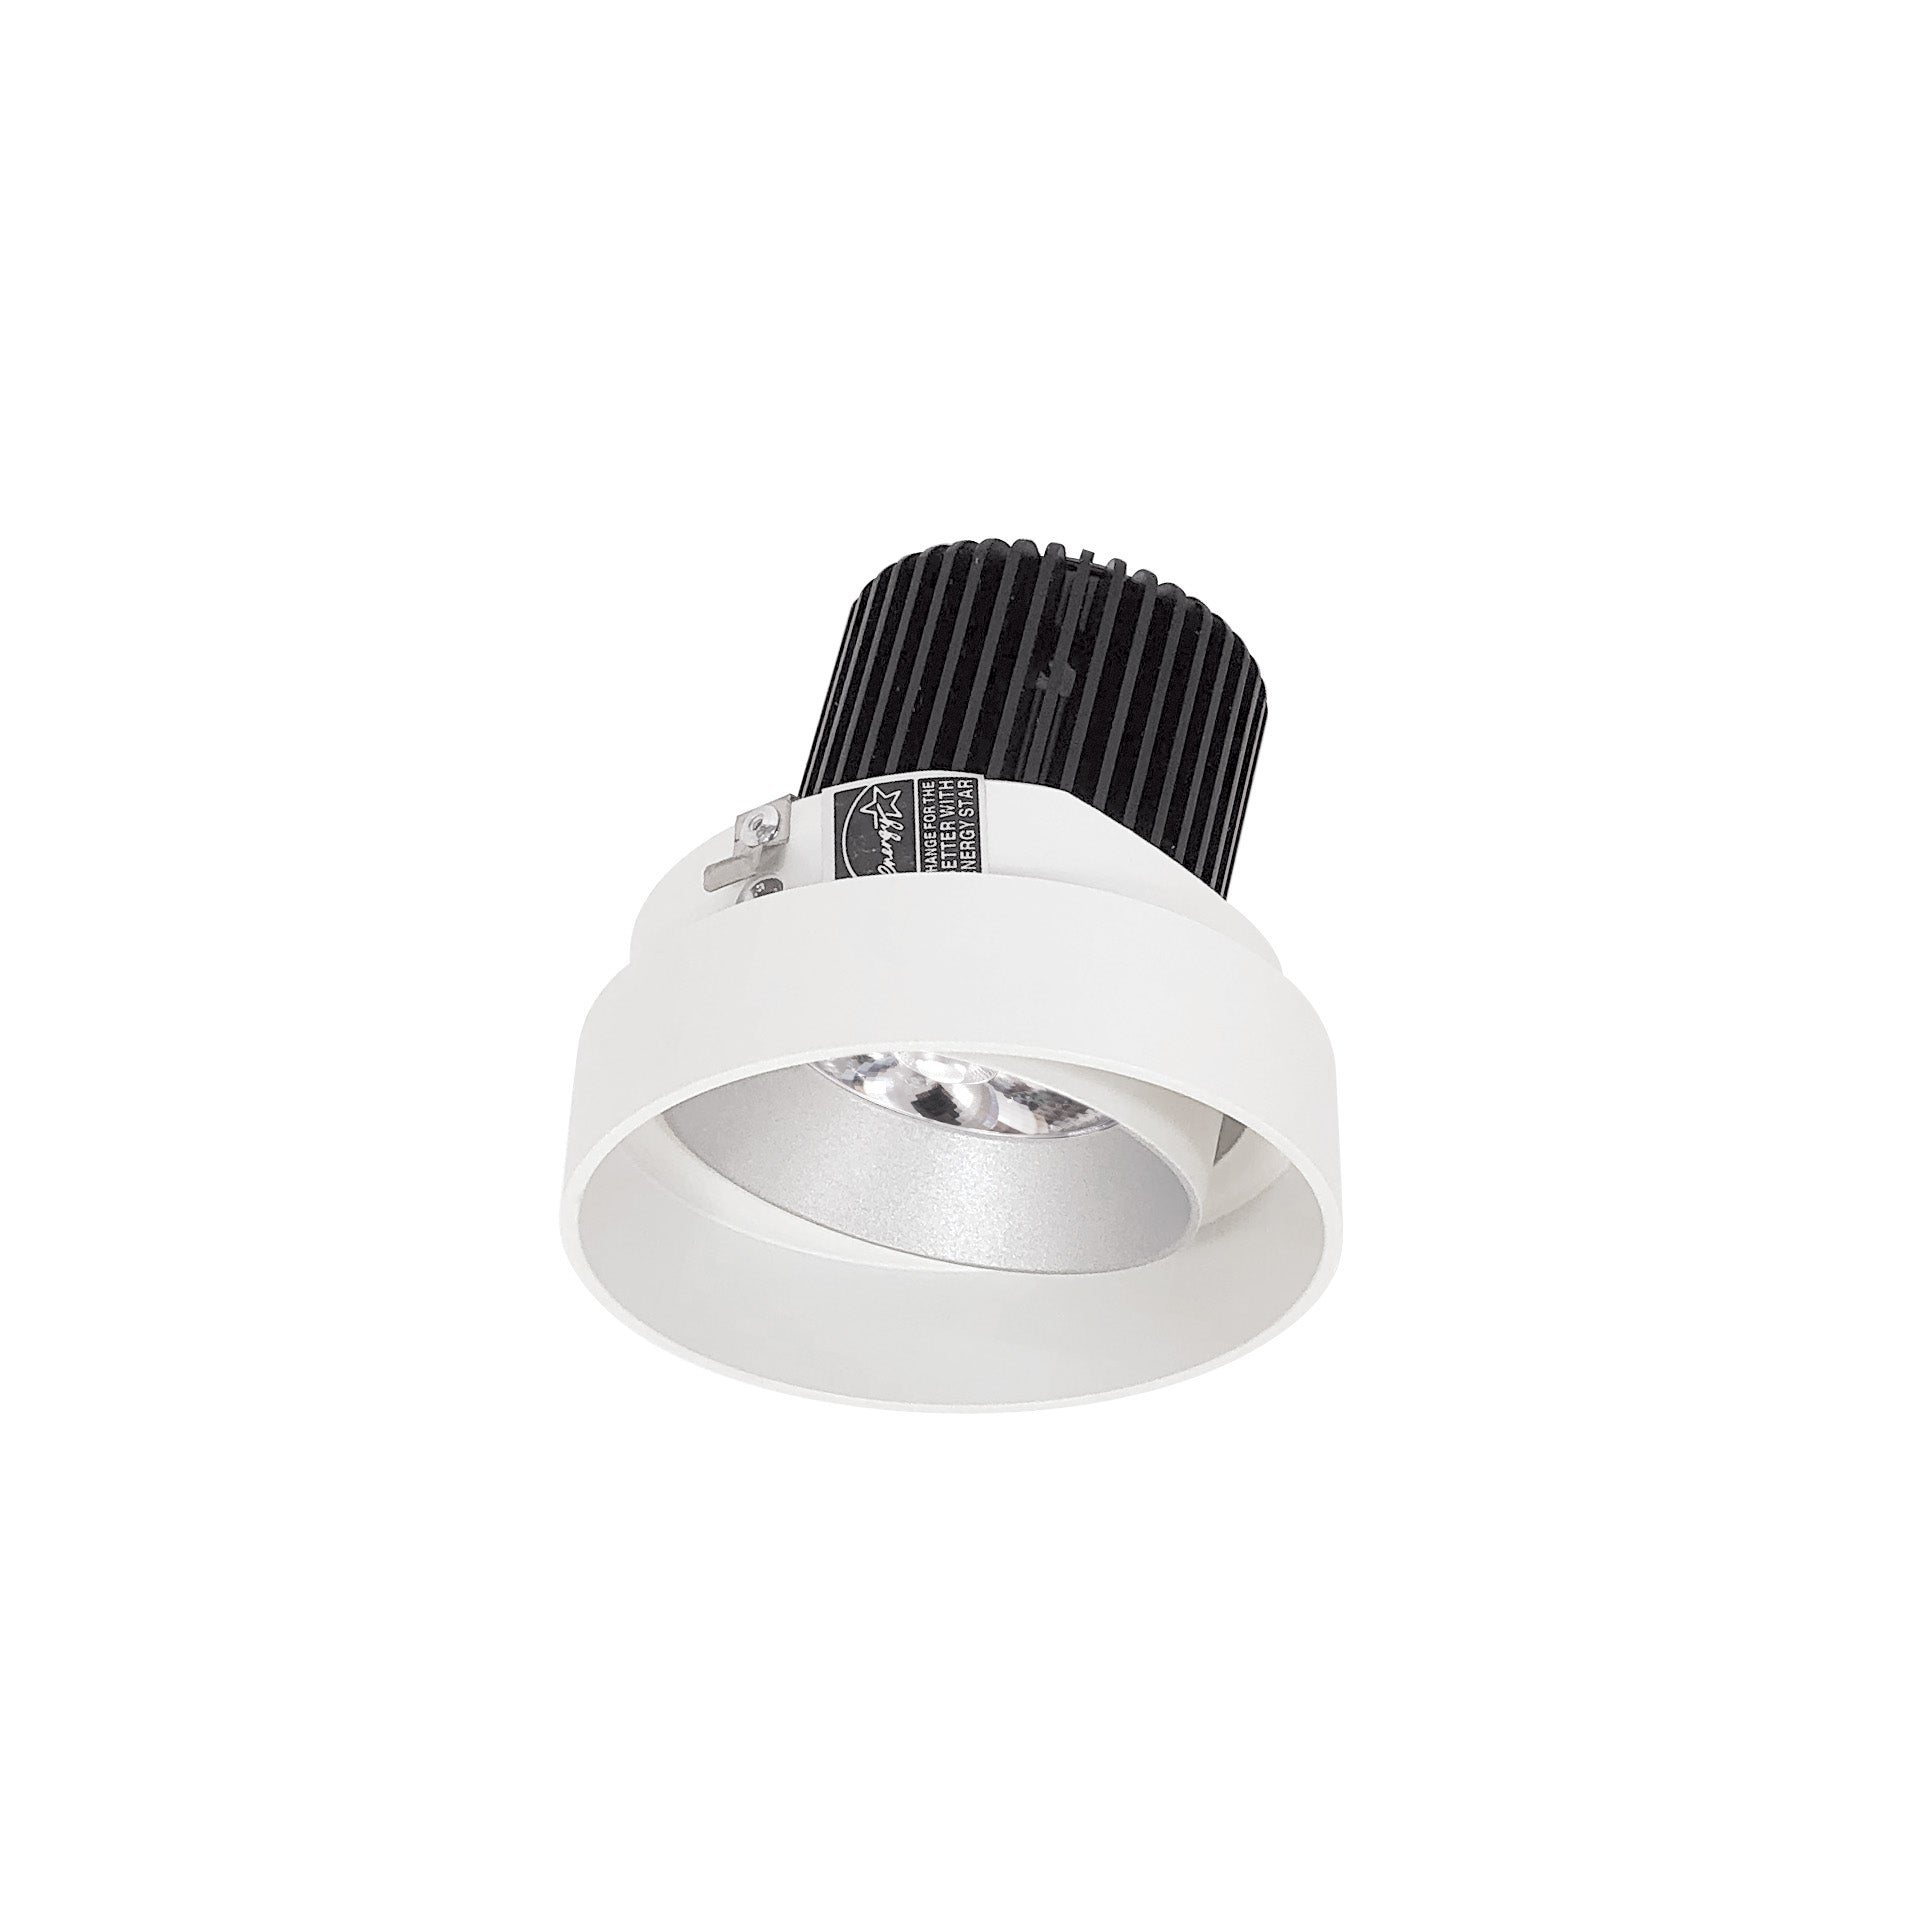 Nora Lighting NIO-4RTLA30QHW 4" Iolite LED Round Trimless Adjustable, 10-Degree Optic, 800lm / 12W, 3000K - Haze Adjustable / White Reflector